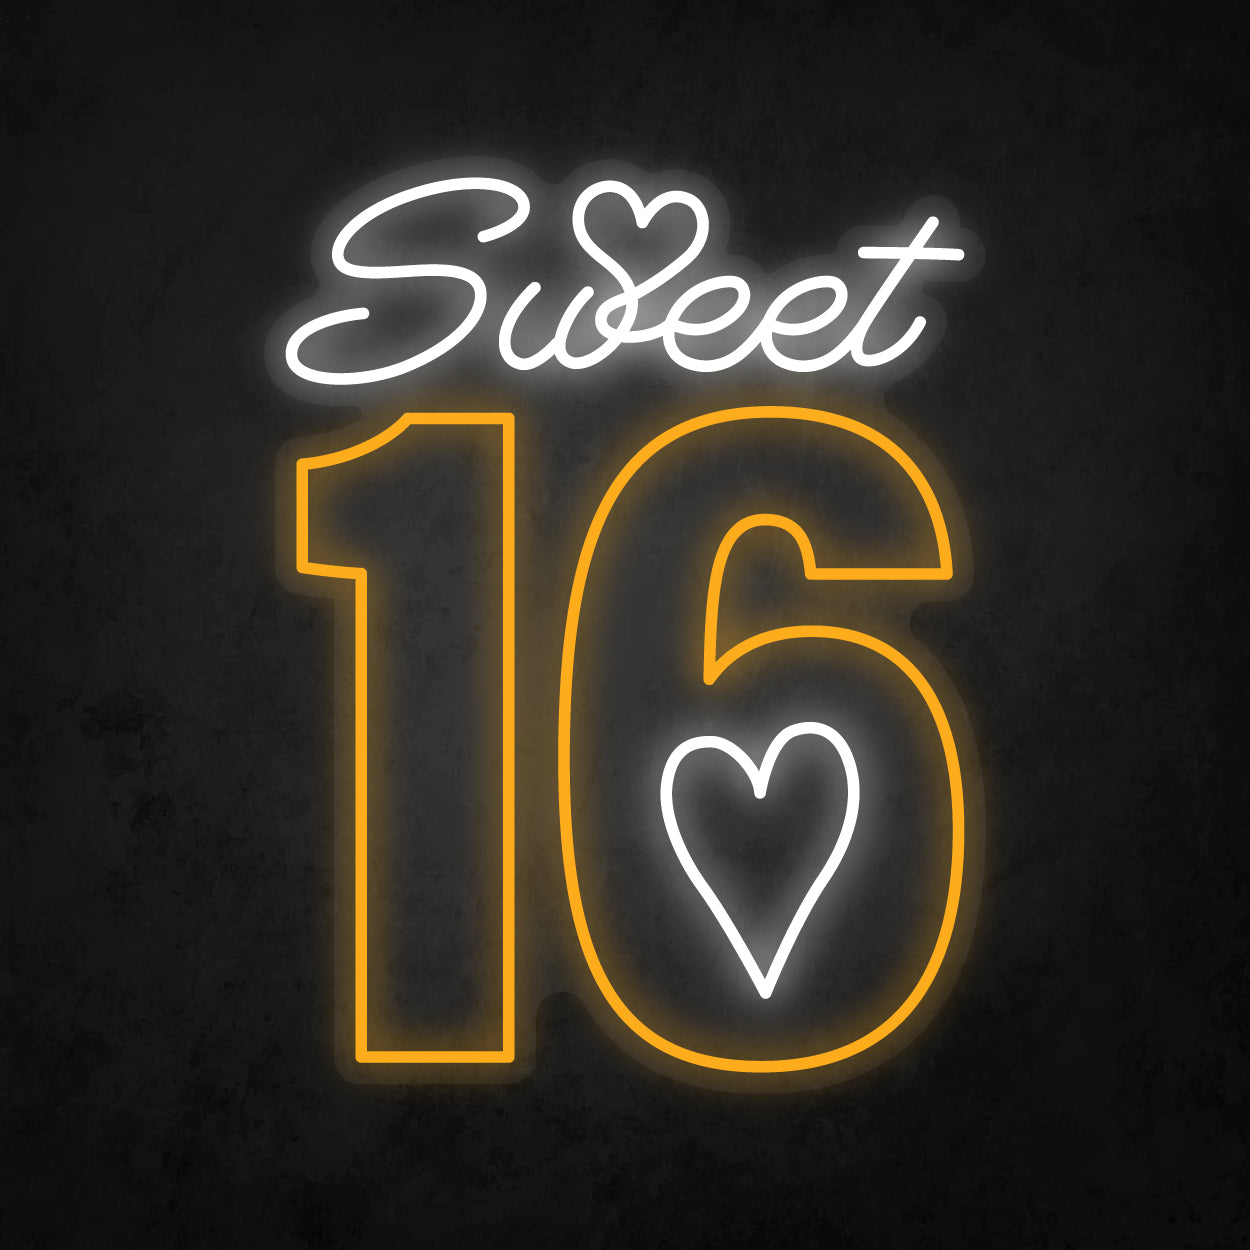 LED Neon Sign - Sweet 16 Heart